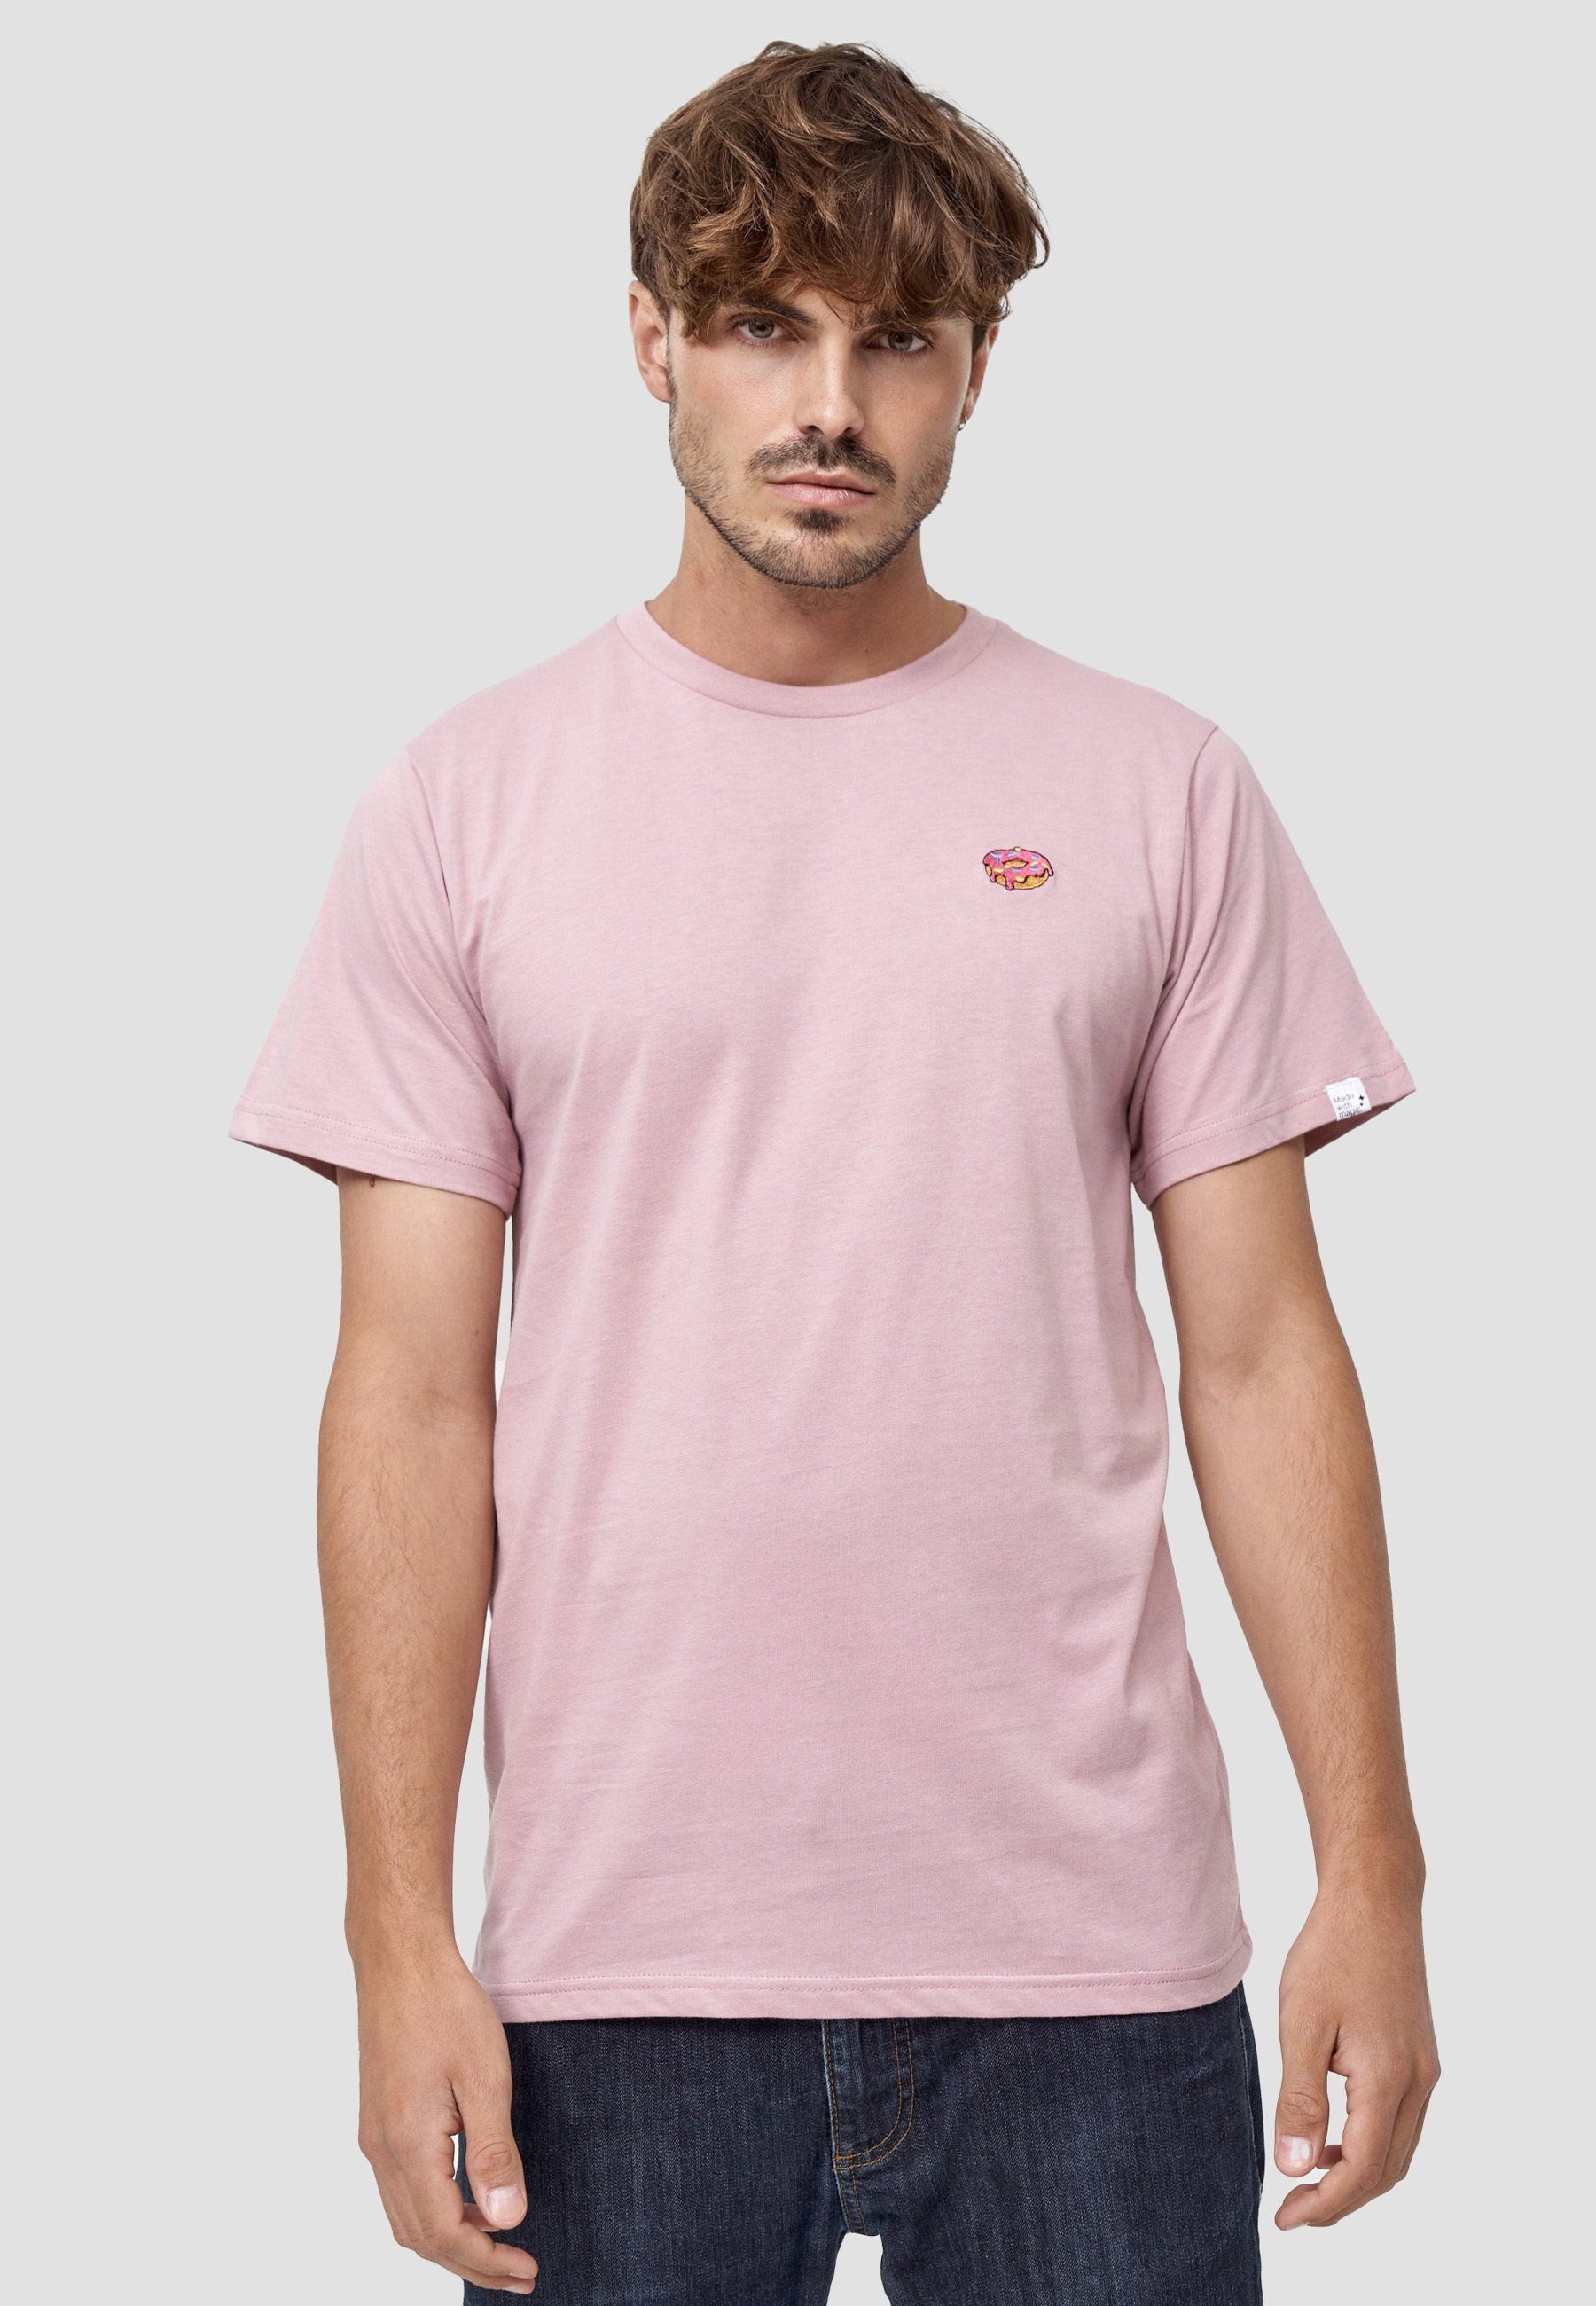 MIKON T-Shirt Donut GOTS zertifizierte Bio-Baumwolle Pink